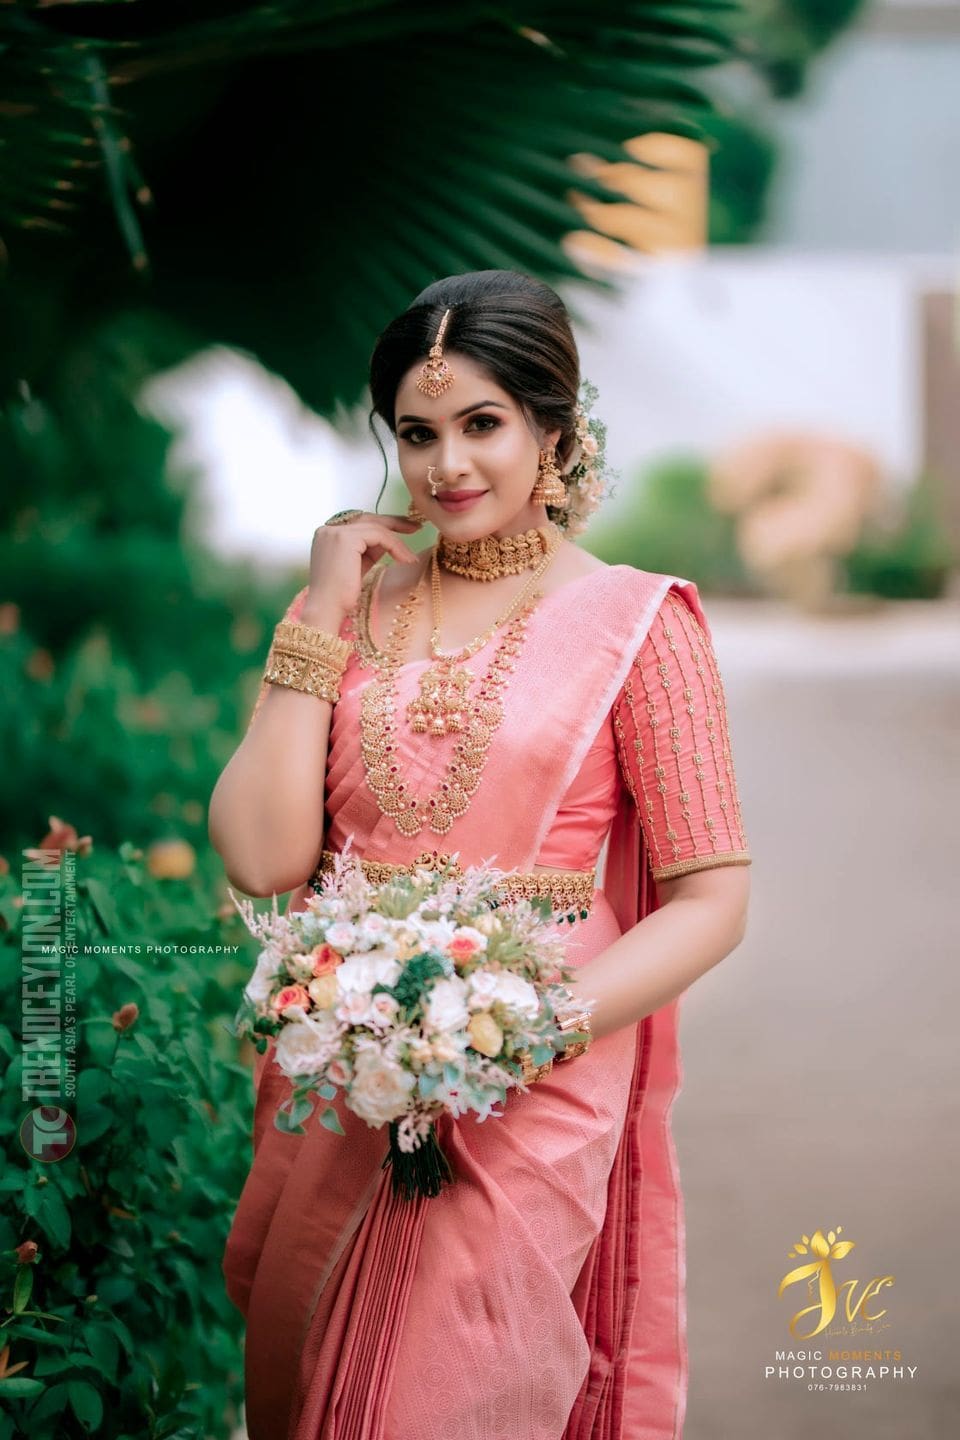 Sri Lankan Model Nayomi Perera looks extra elegant in lace saree